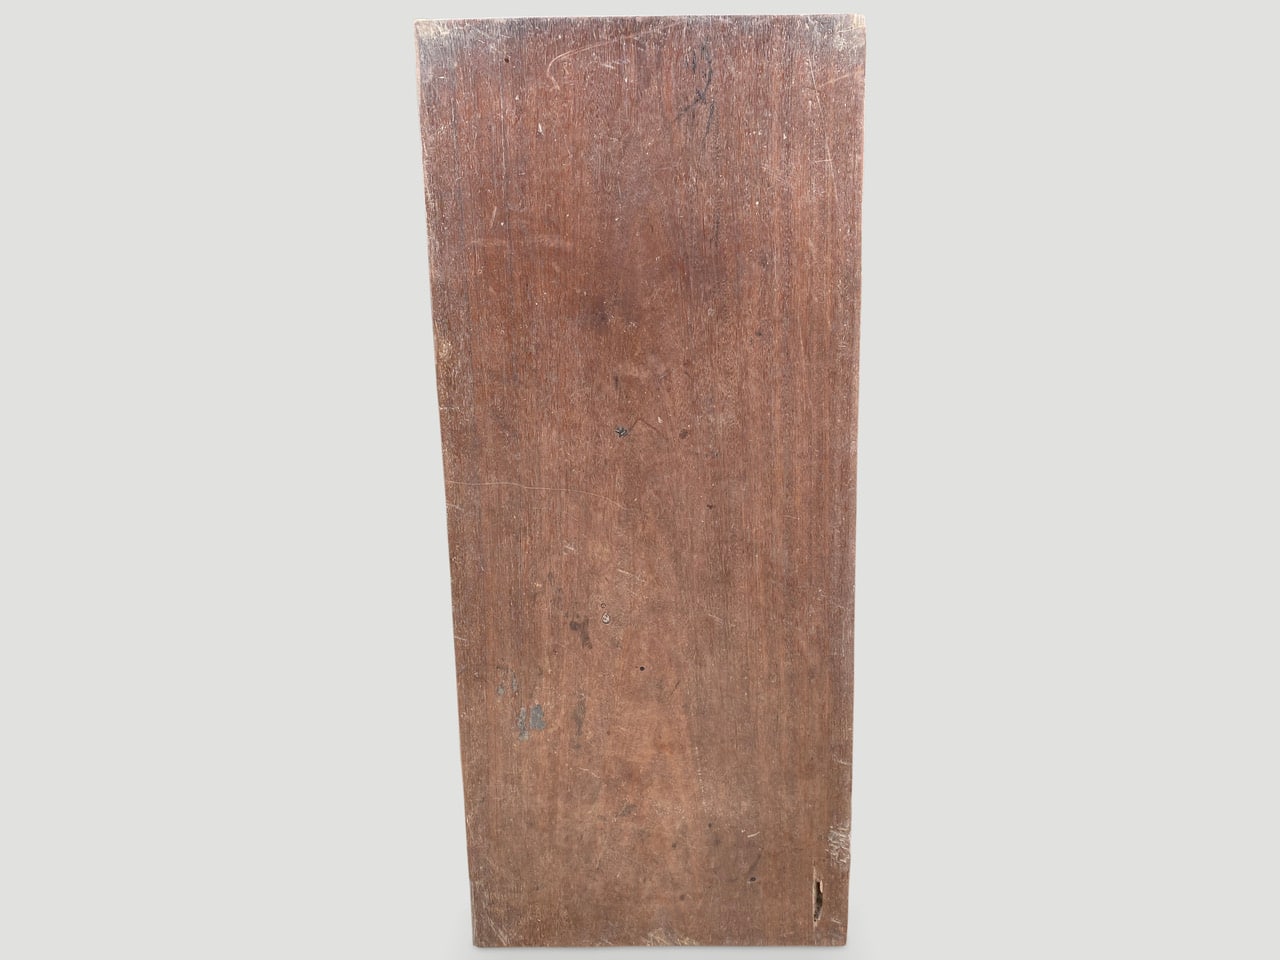 nias wood panel